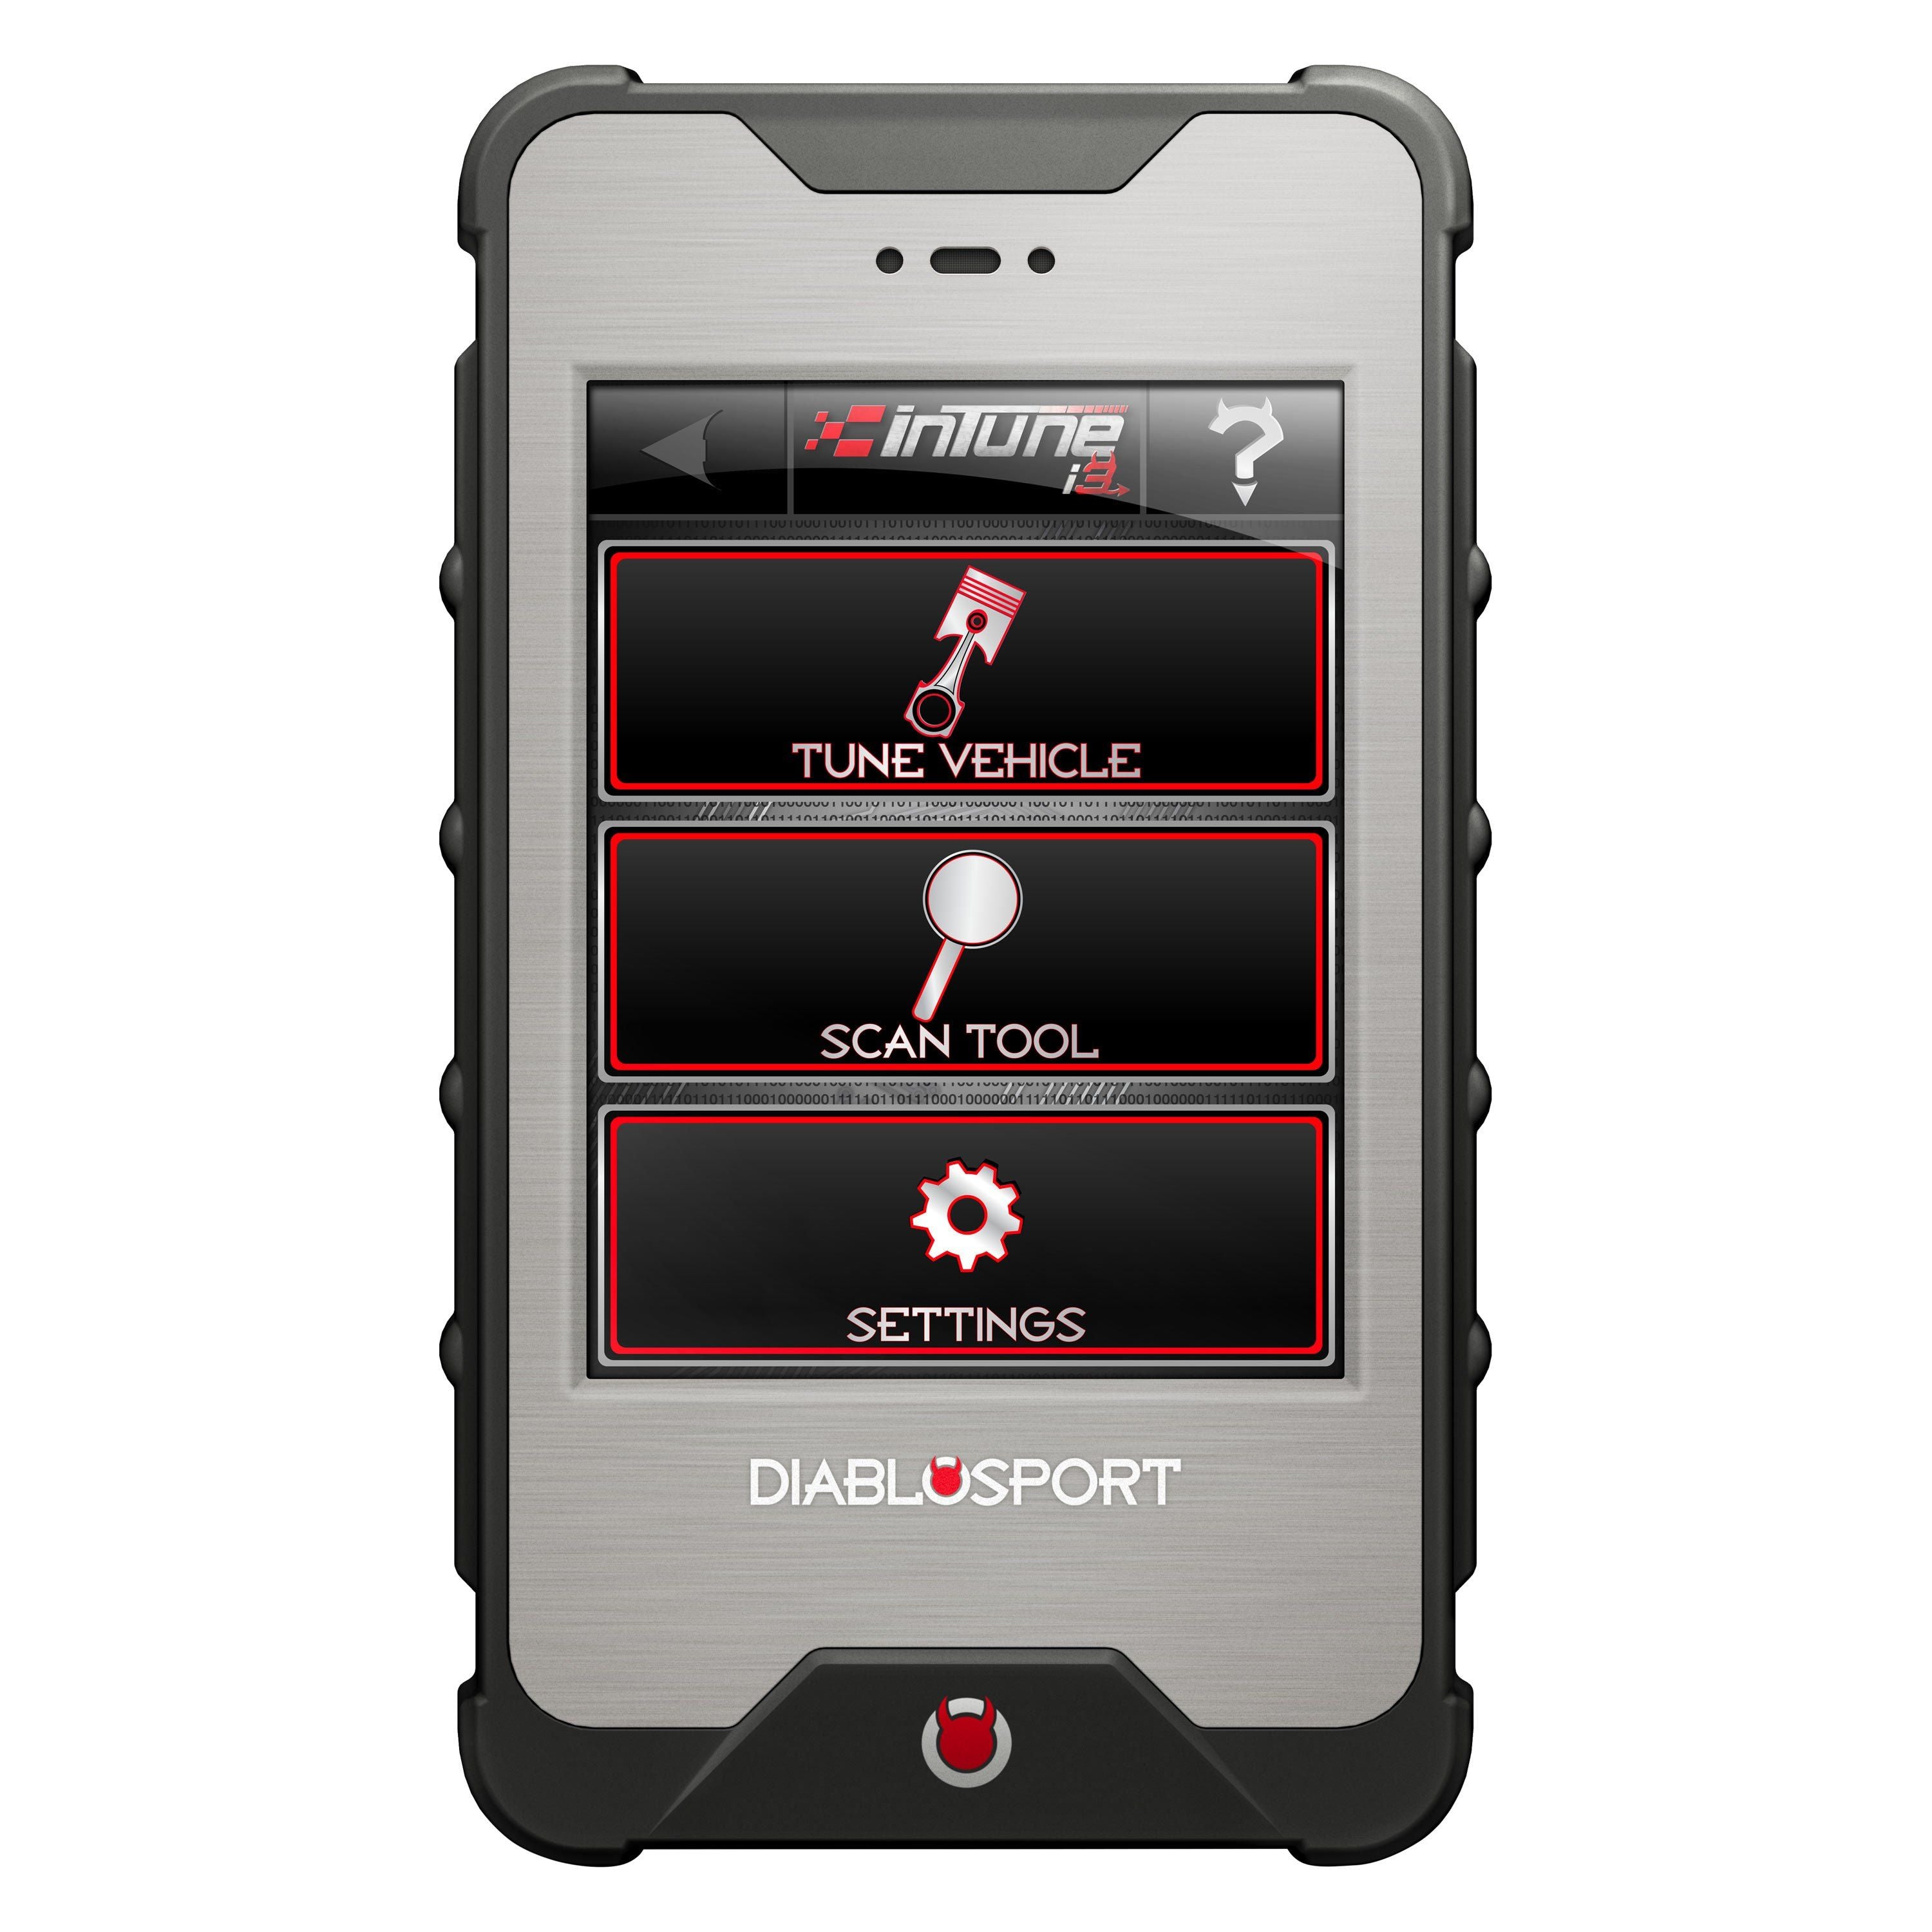 DiabloSport 8245 - DiabloSport InTune i3 Performance Programmer for GM Vehicules